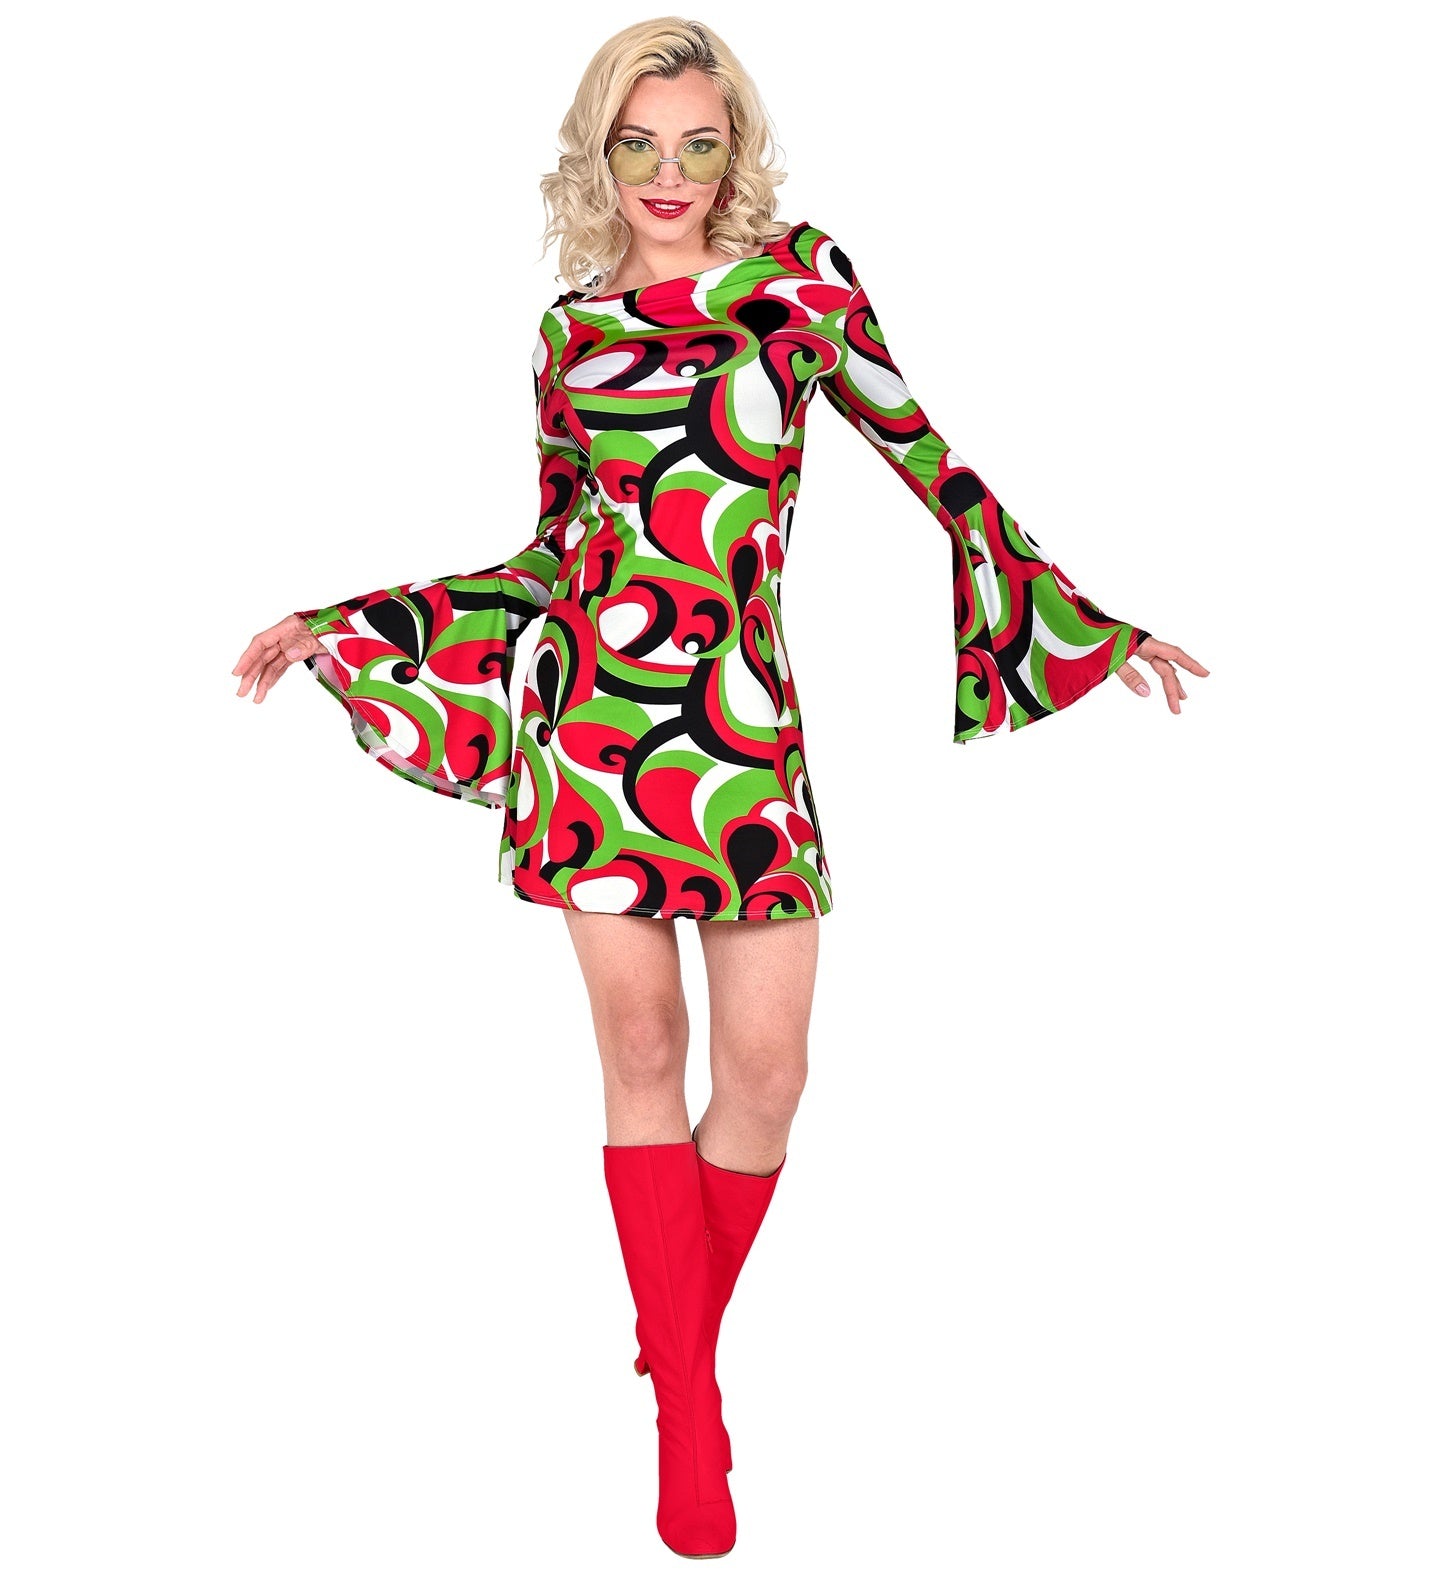 Widmann - Hippie Kostuum - Miss Seventies Jurk Vrouw - rood,groen - XXL - Carnavalskleding - Verkleedkleding